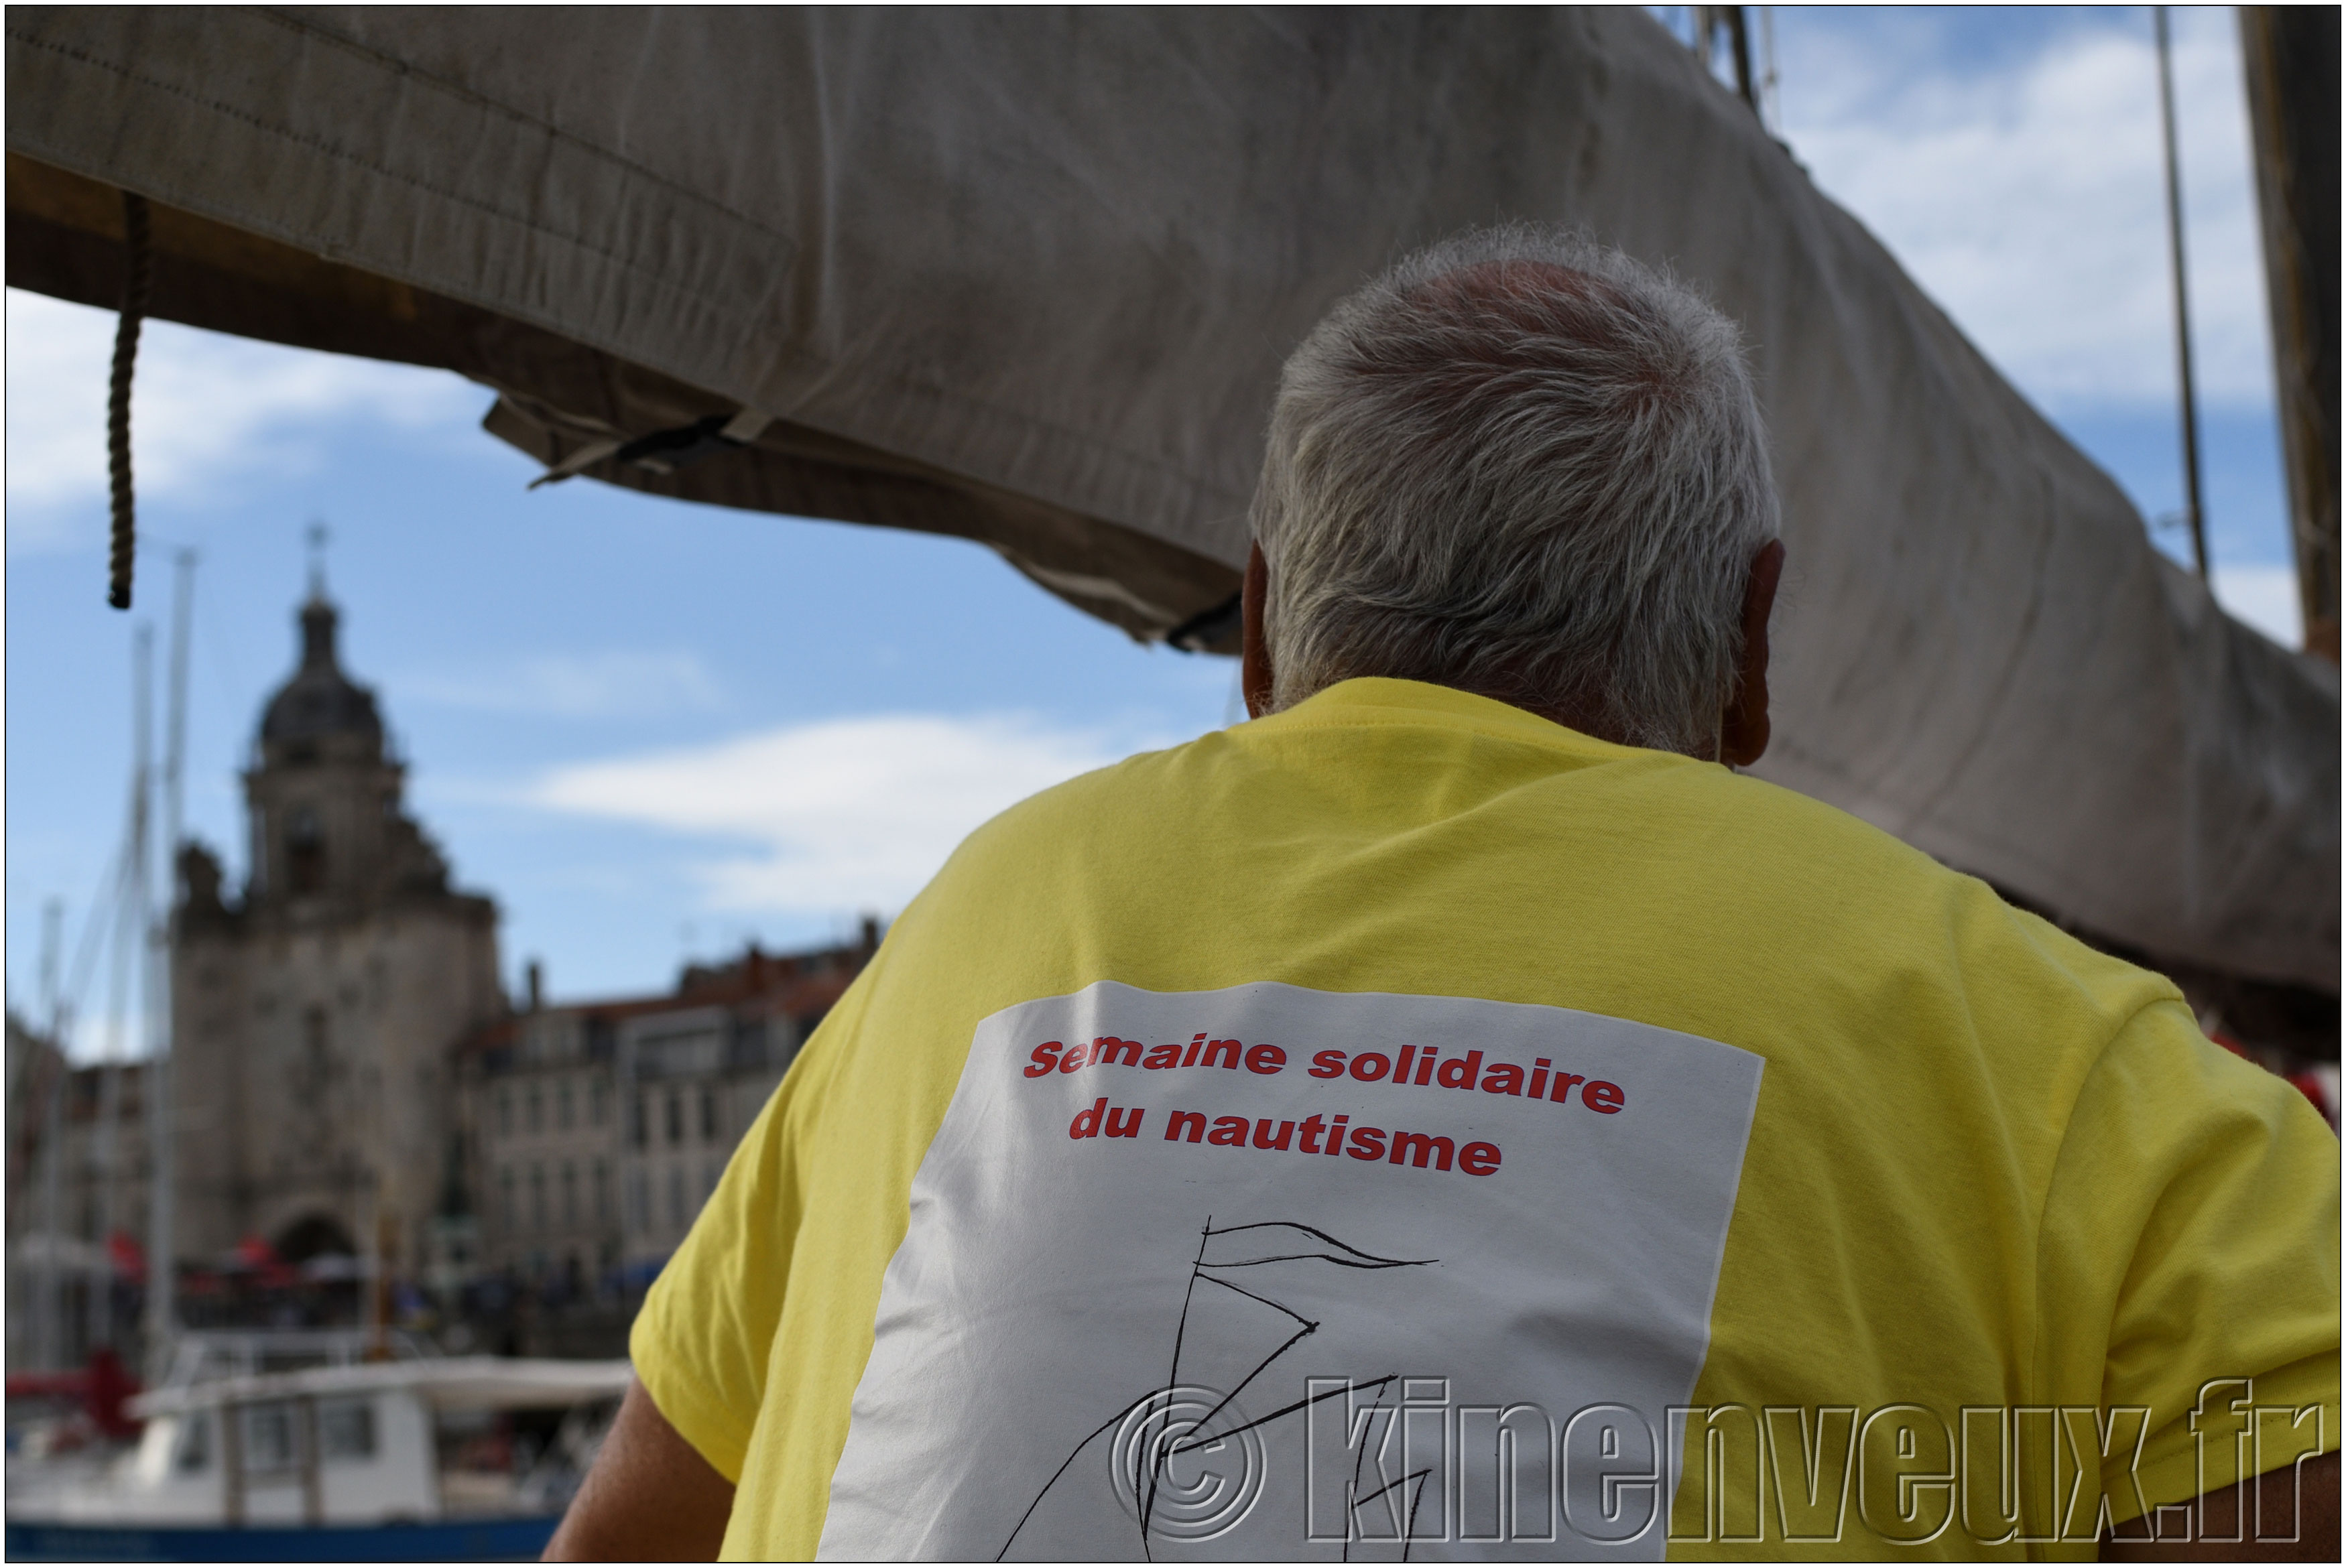 SemaineSolidaireNautisme_12_kinenveux.jpg - Semaine Solidaire du Nautisme 2020 - La Rochelle